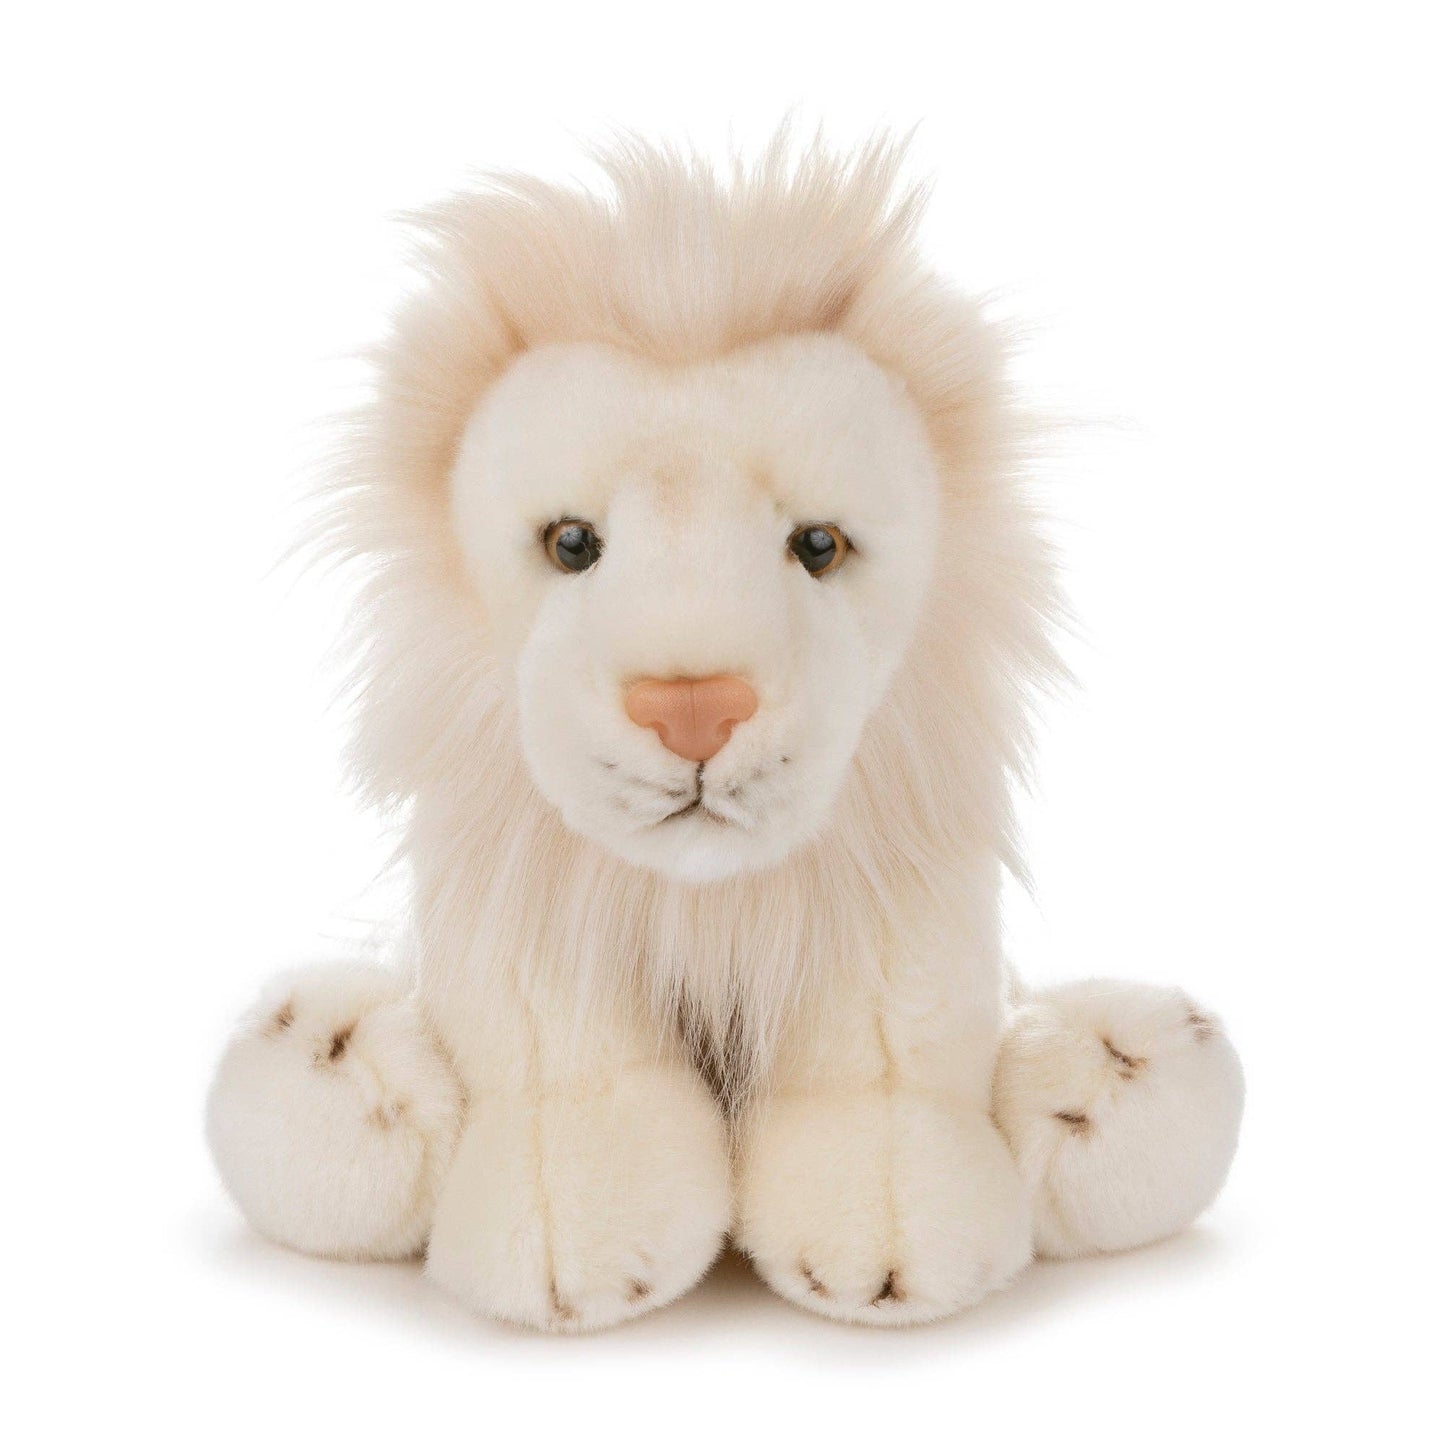 12" Stuffed White Lion